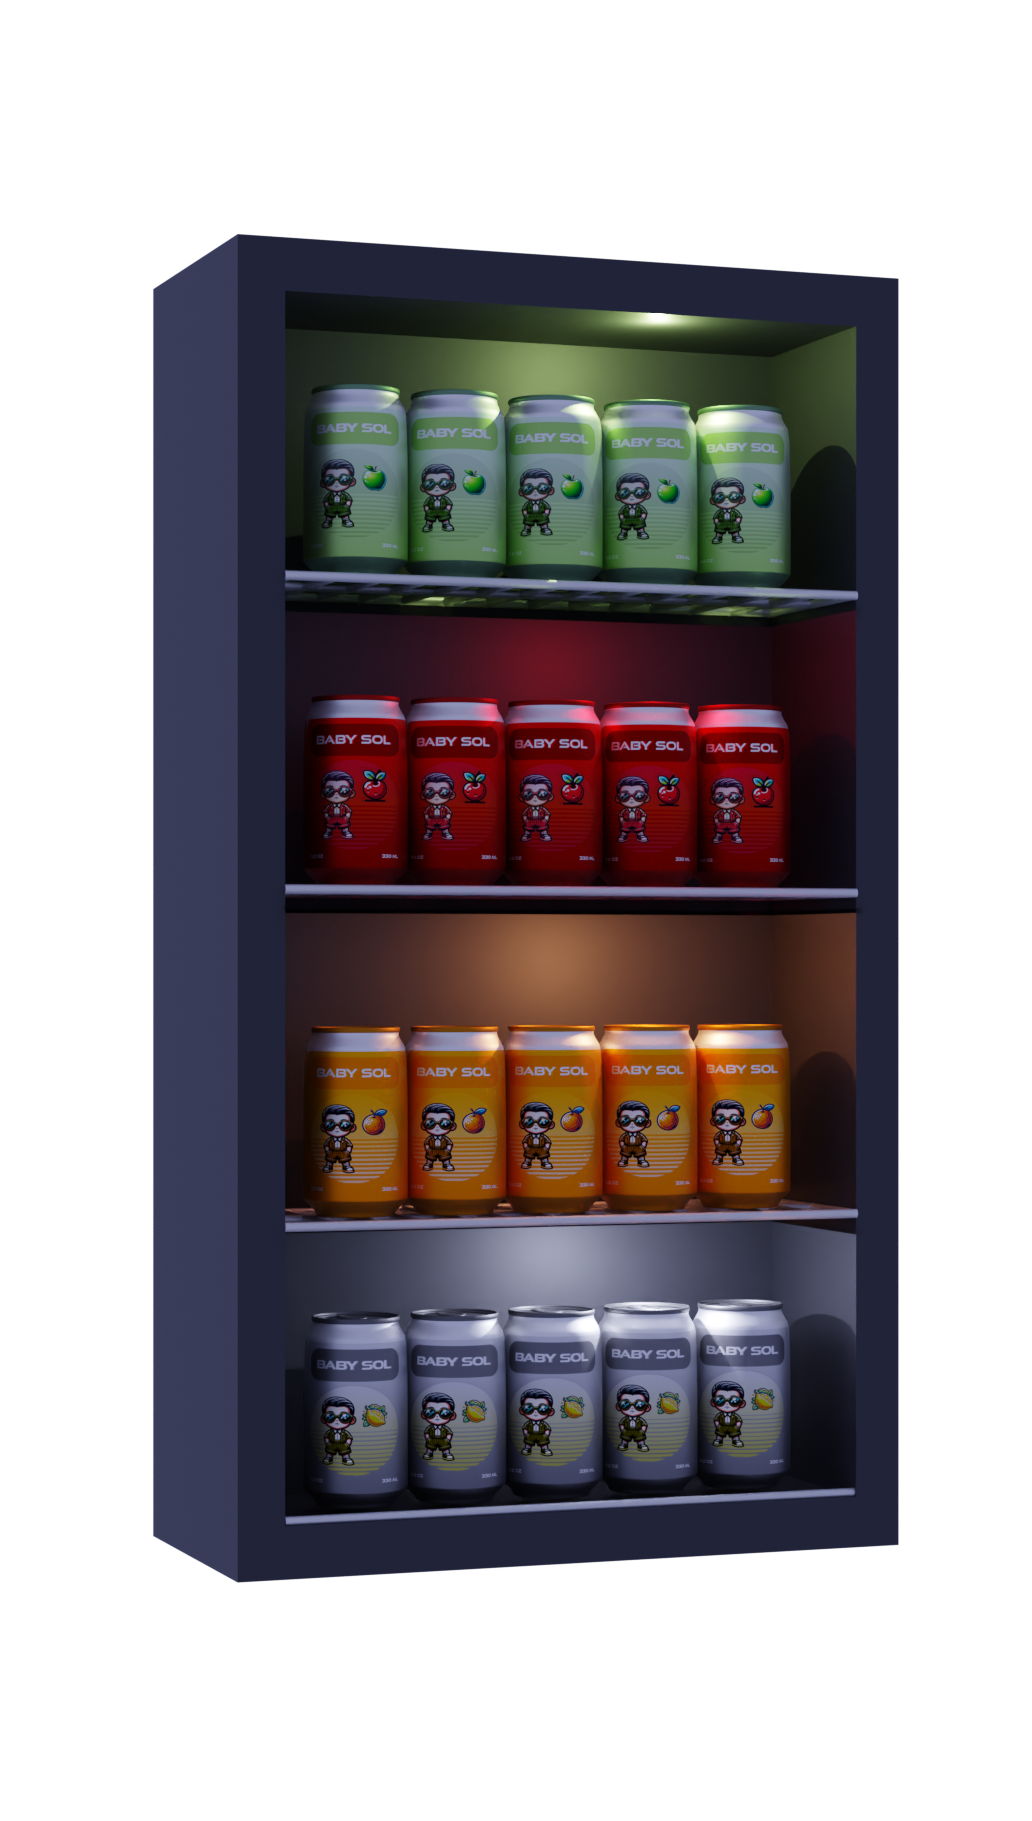 BabySOL fridge